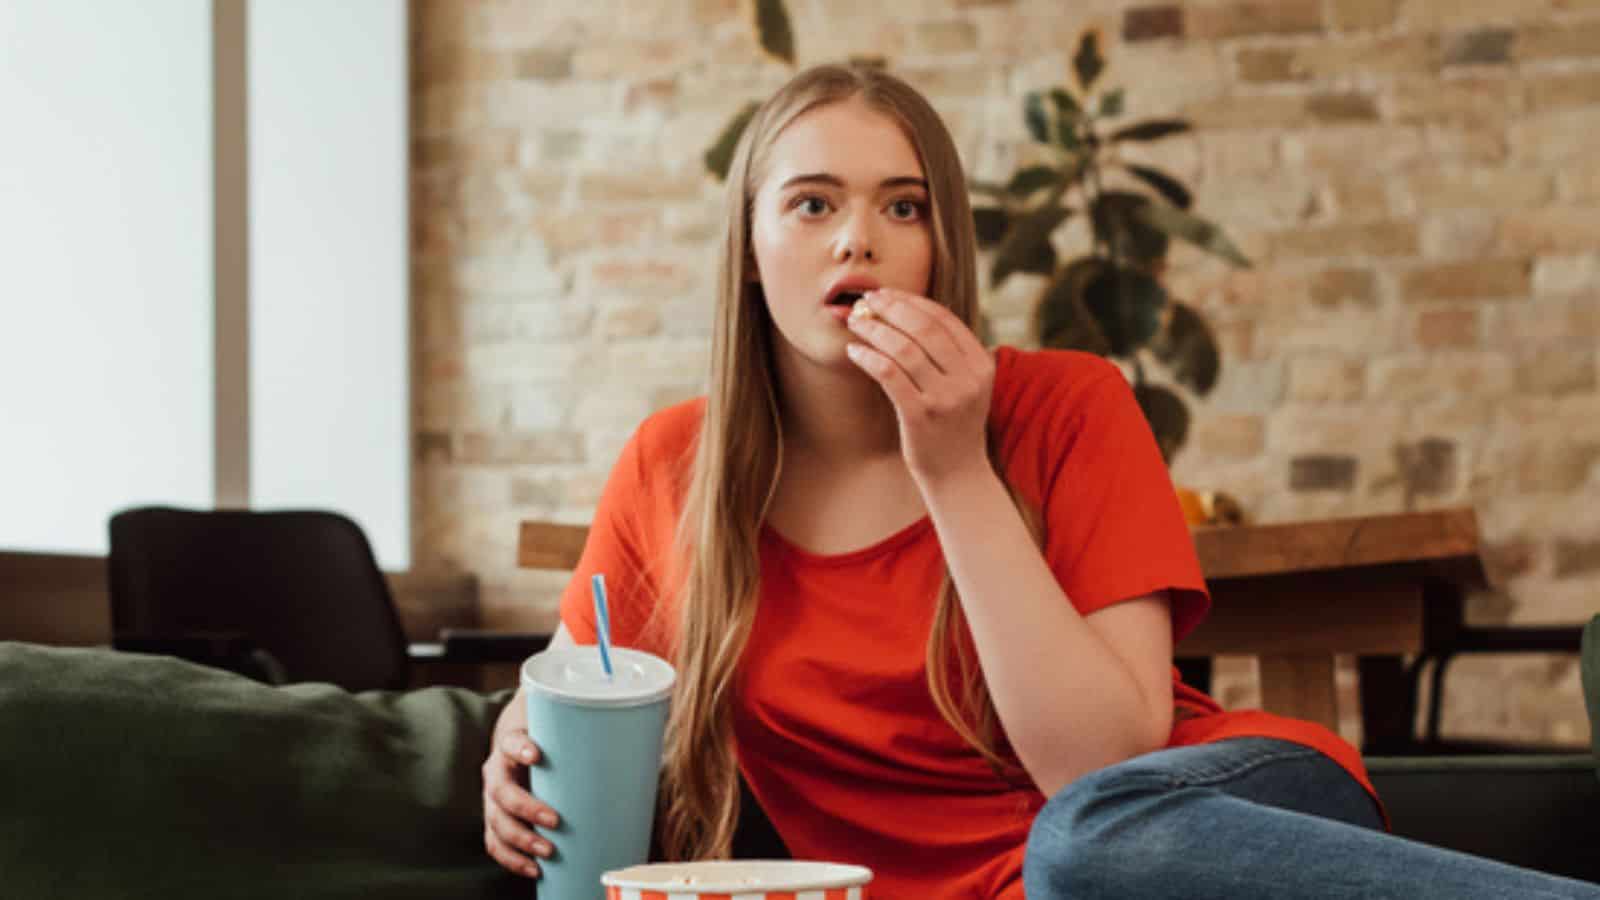 Panoramic shot of attractive girl eating popcorn